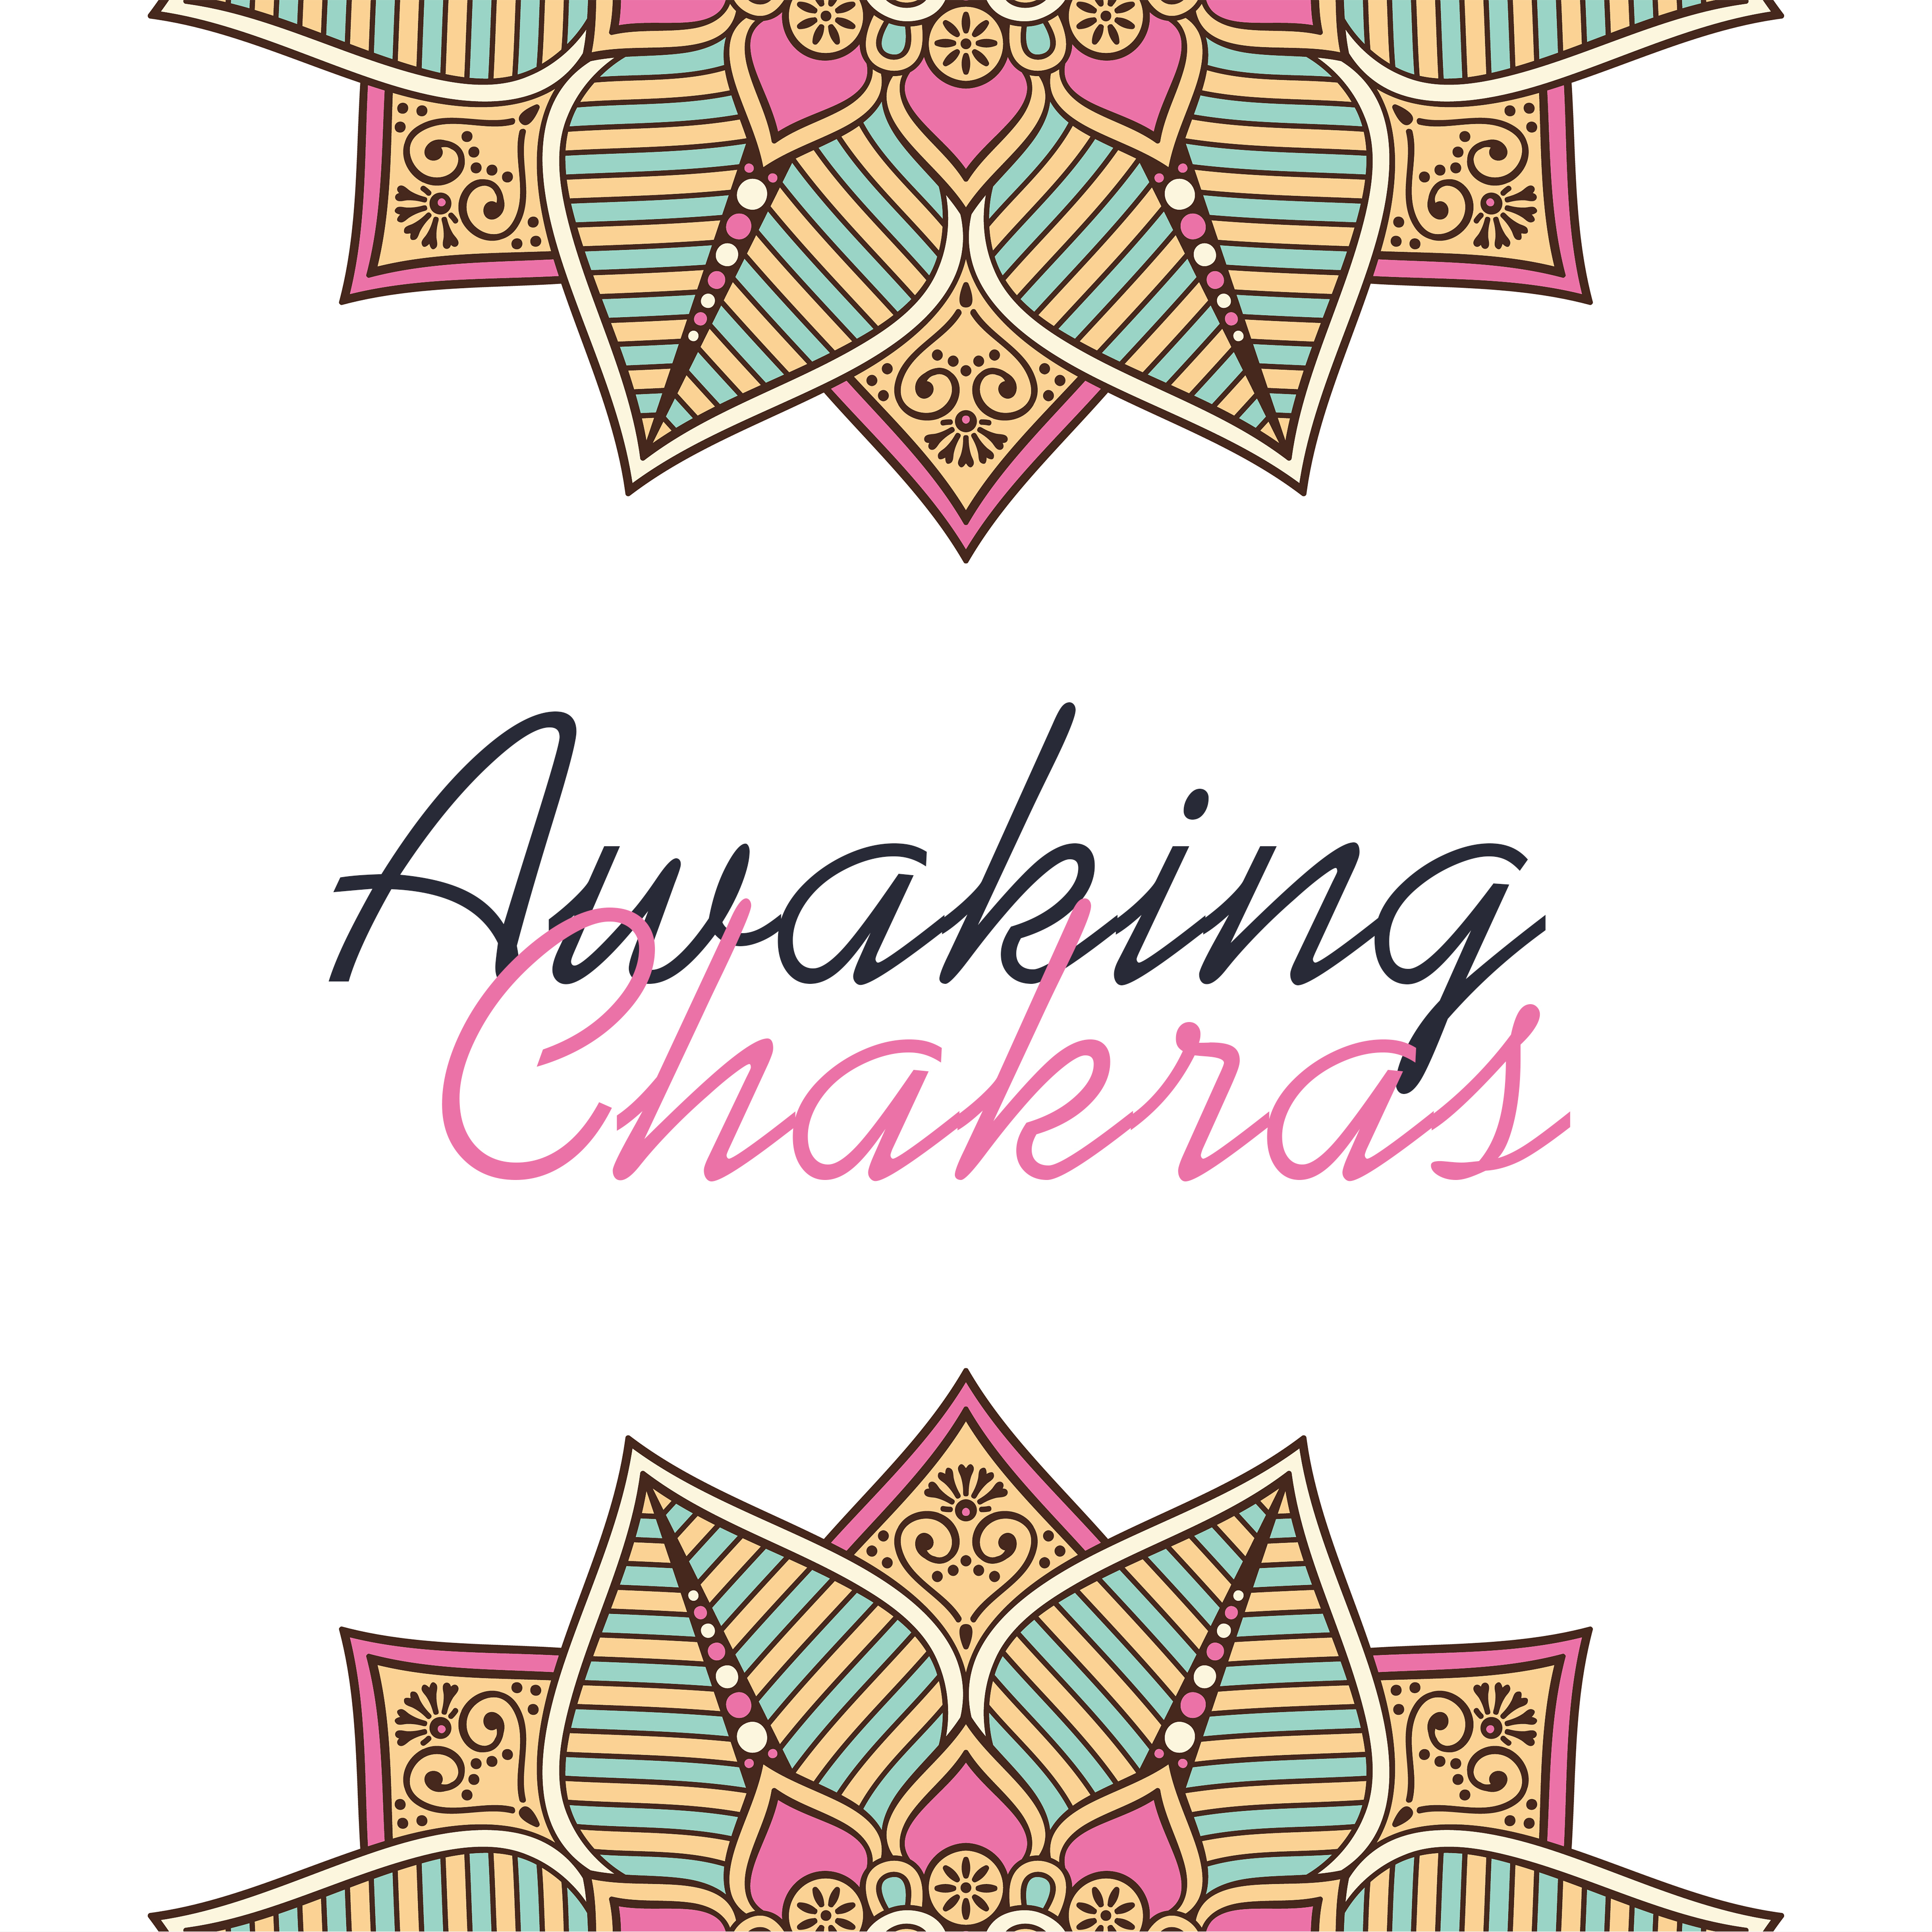 Awaking Chakras: Music for music for Meditation, Internal Development and Spiritual Liberation